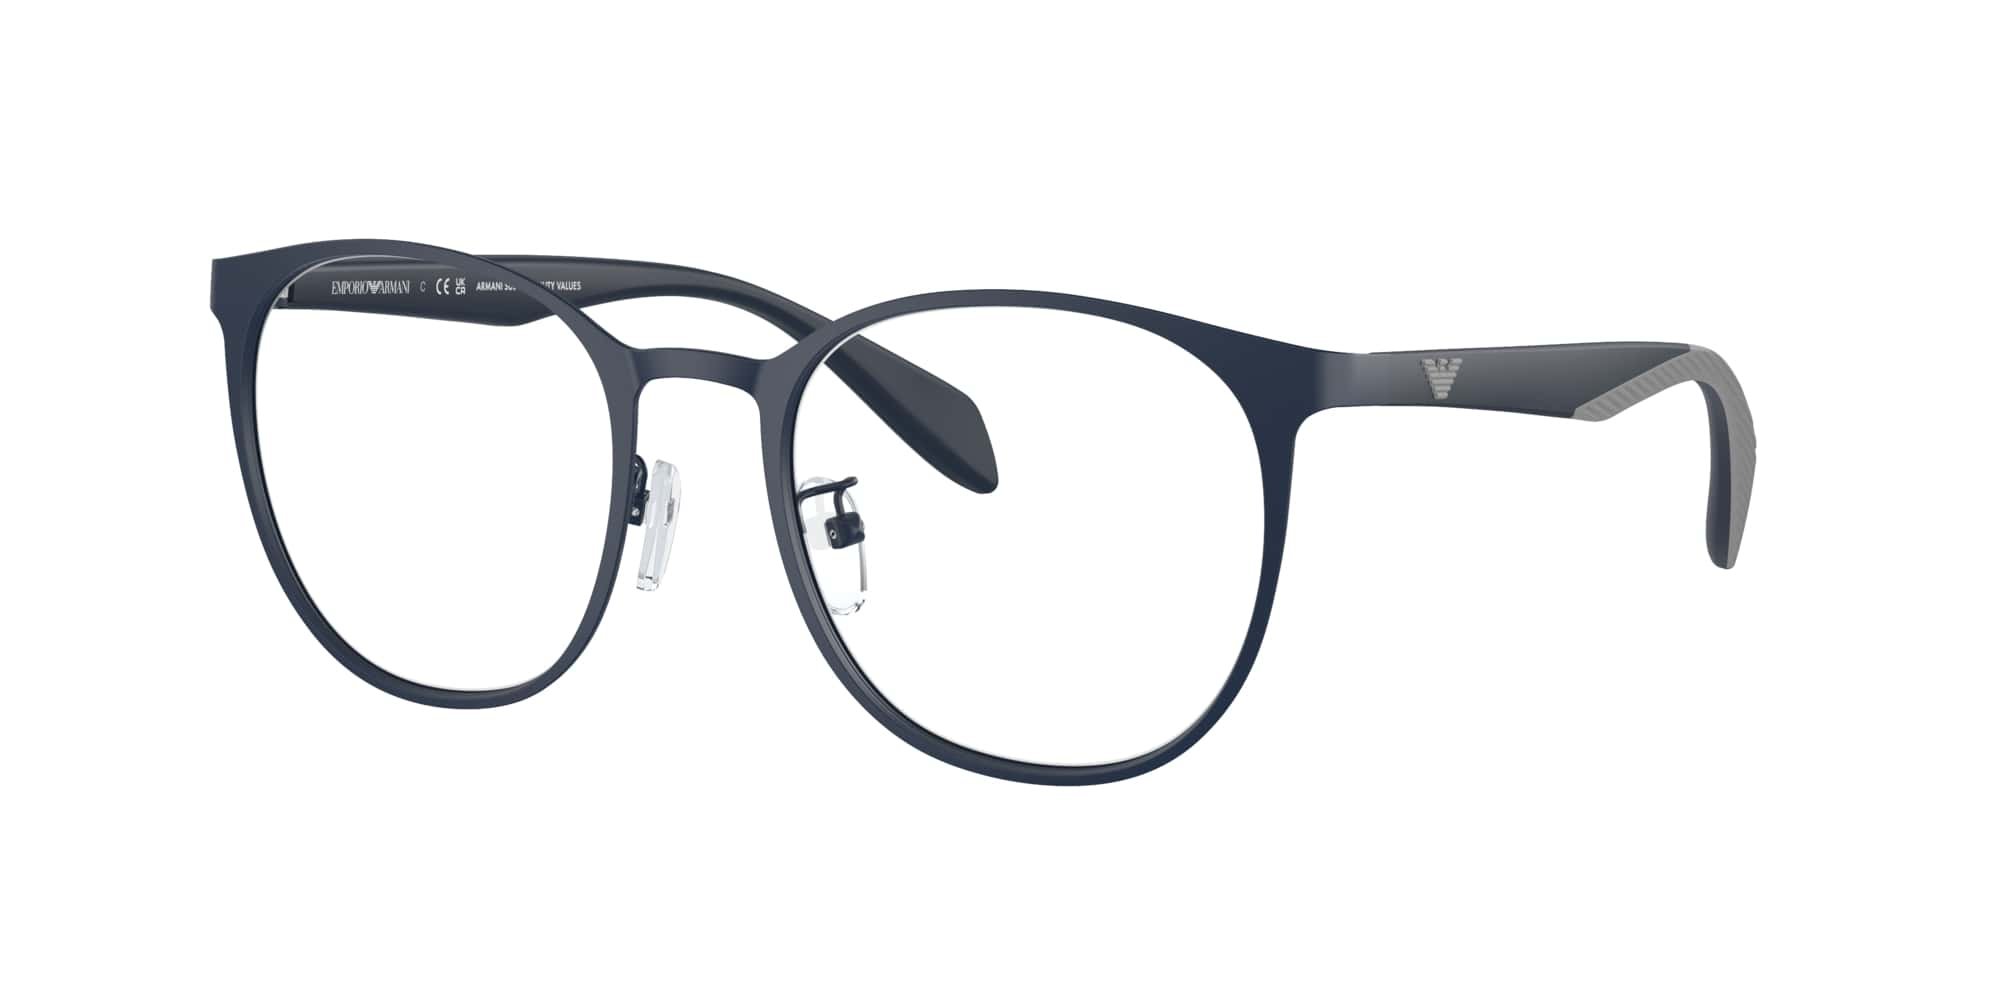 Emporio Armani Brille für Herren in blau matt EA1148 3018 52